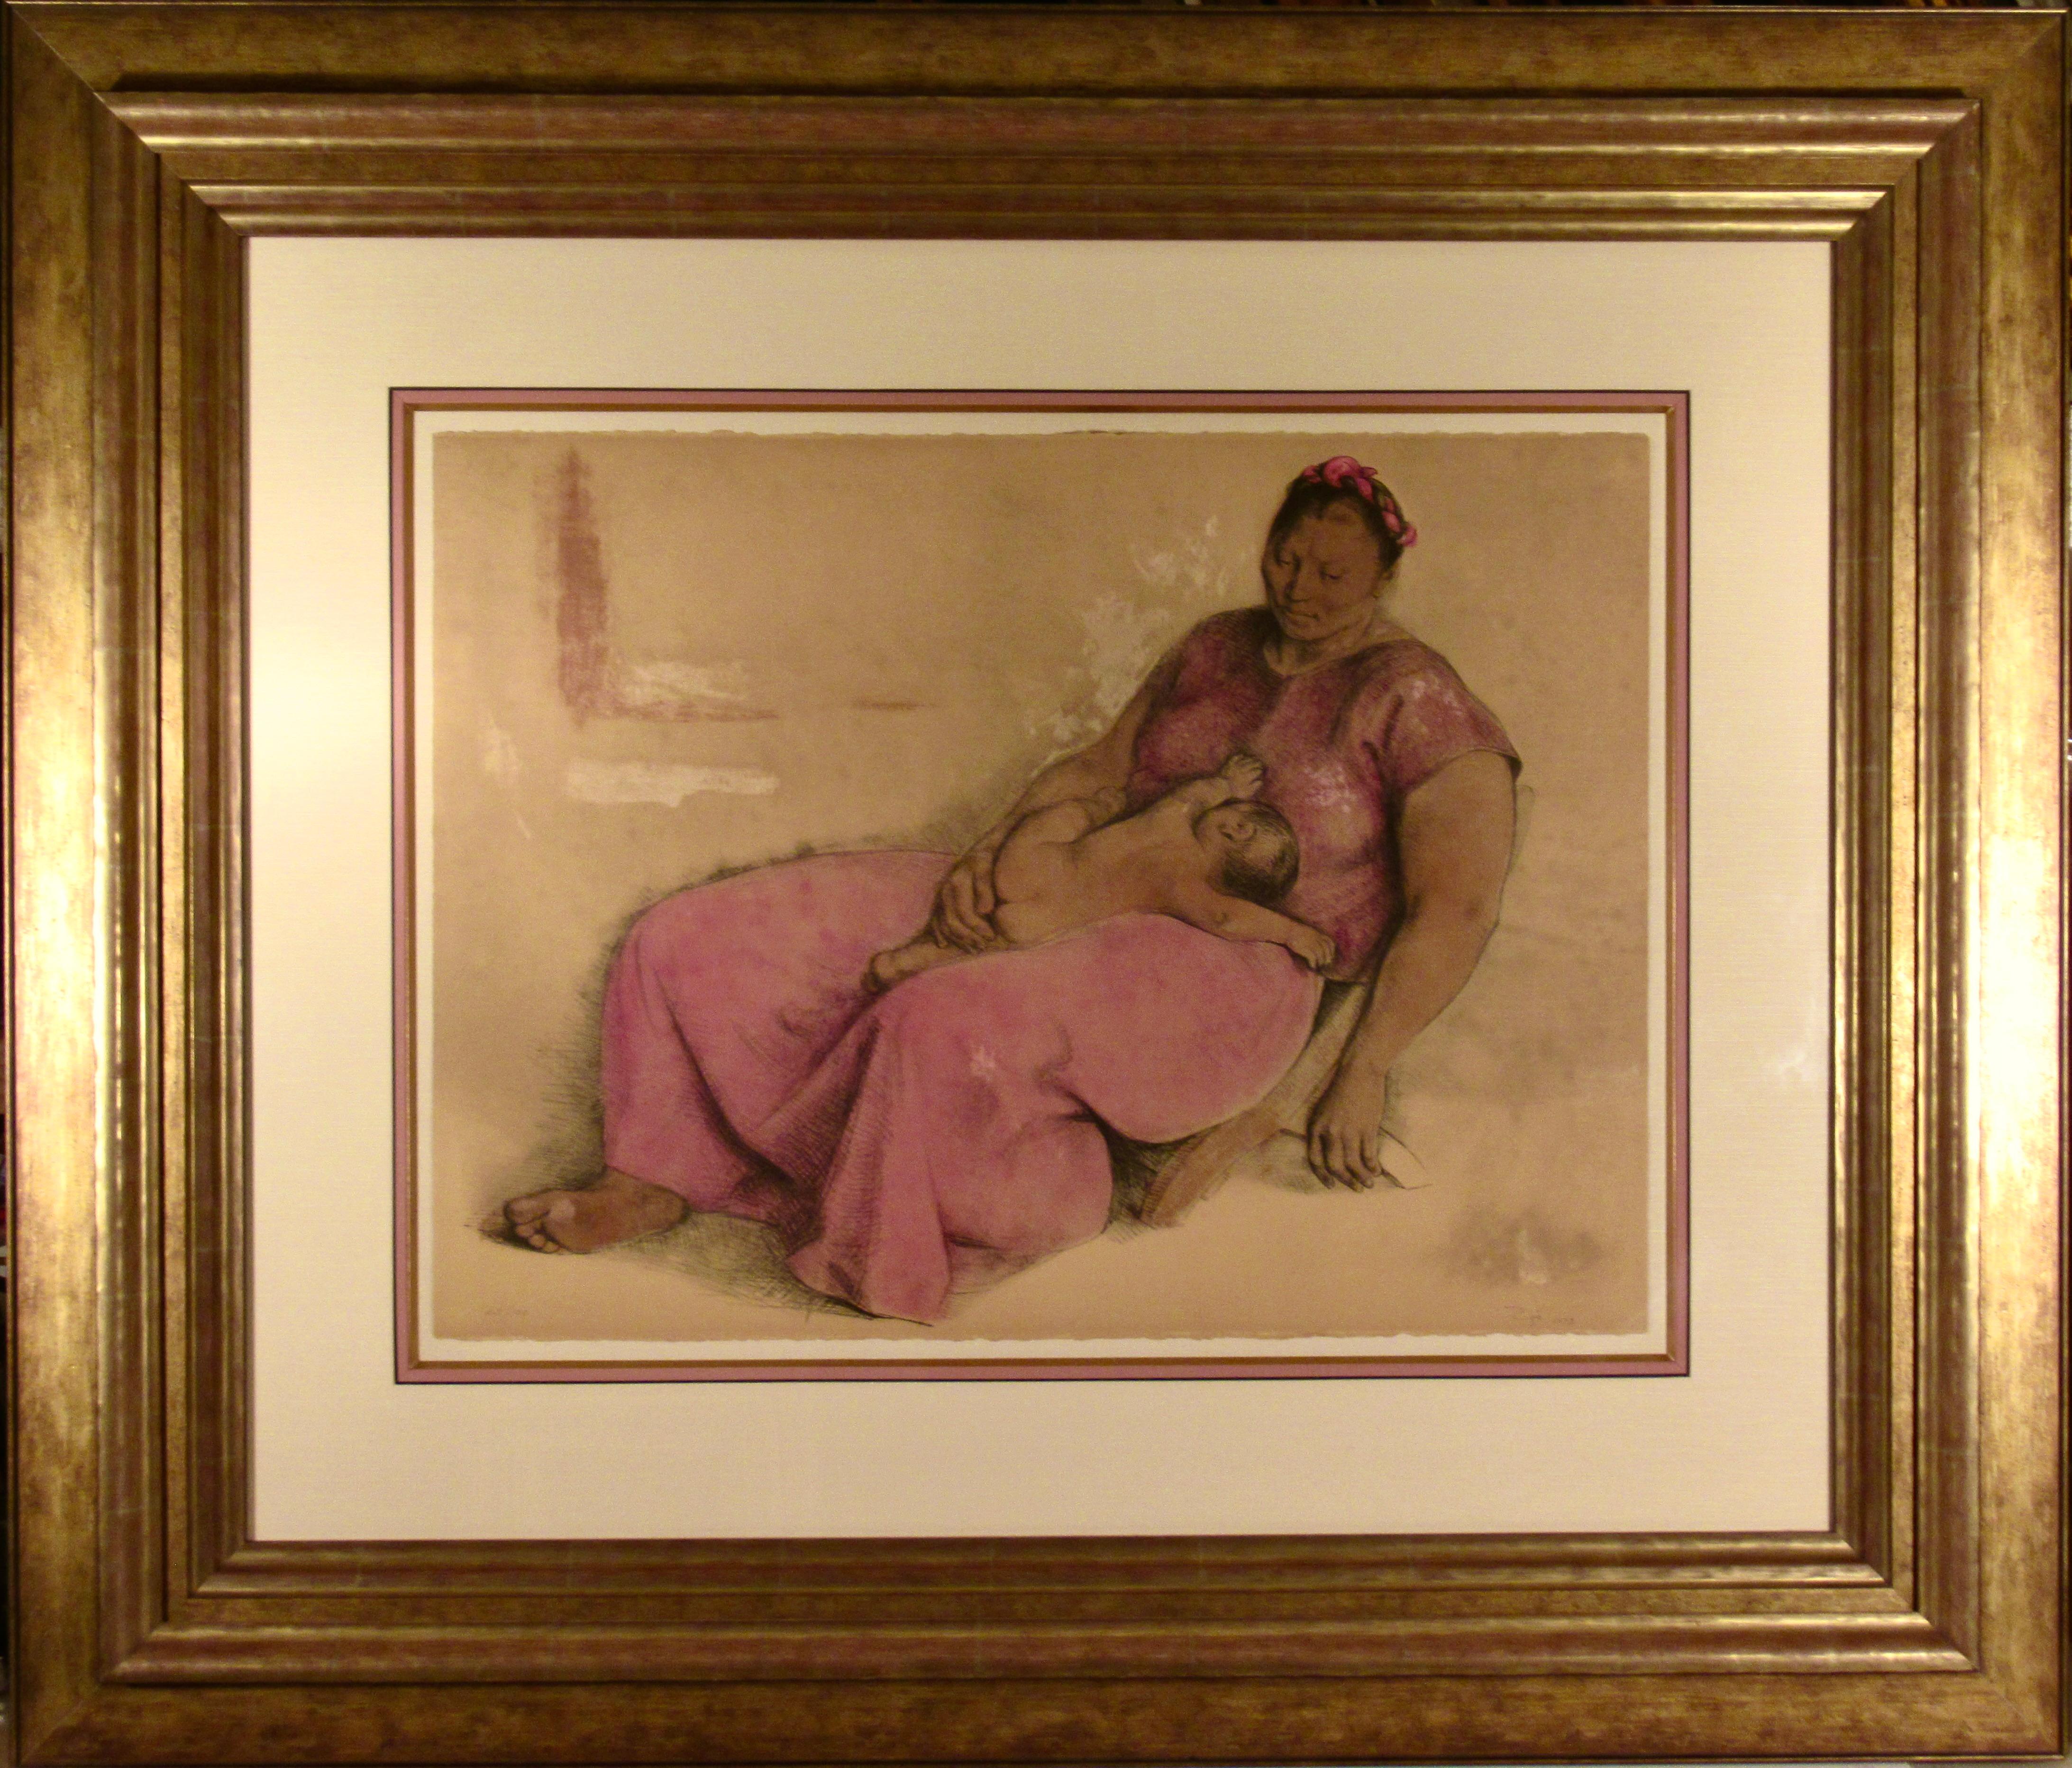 Francisco Zúñiga Figurative Print - "Madre Juchiteca" Large original color lithograph.